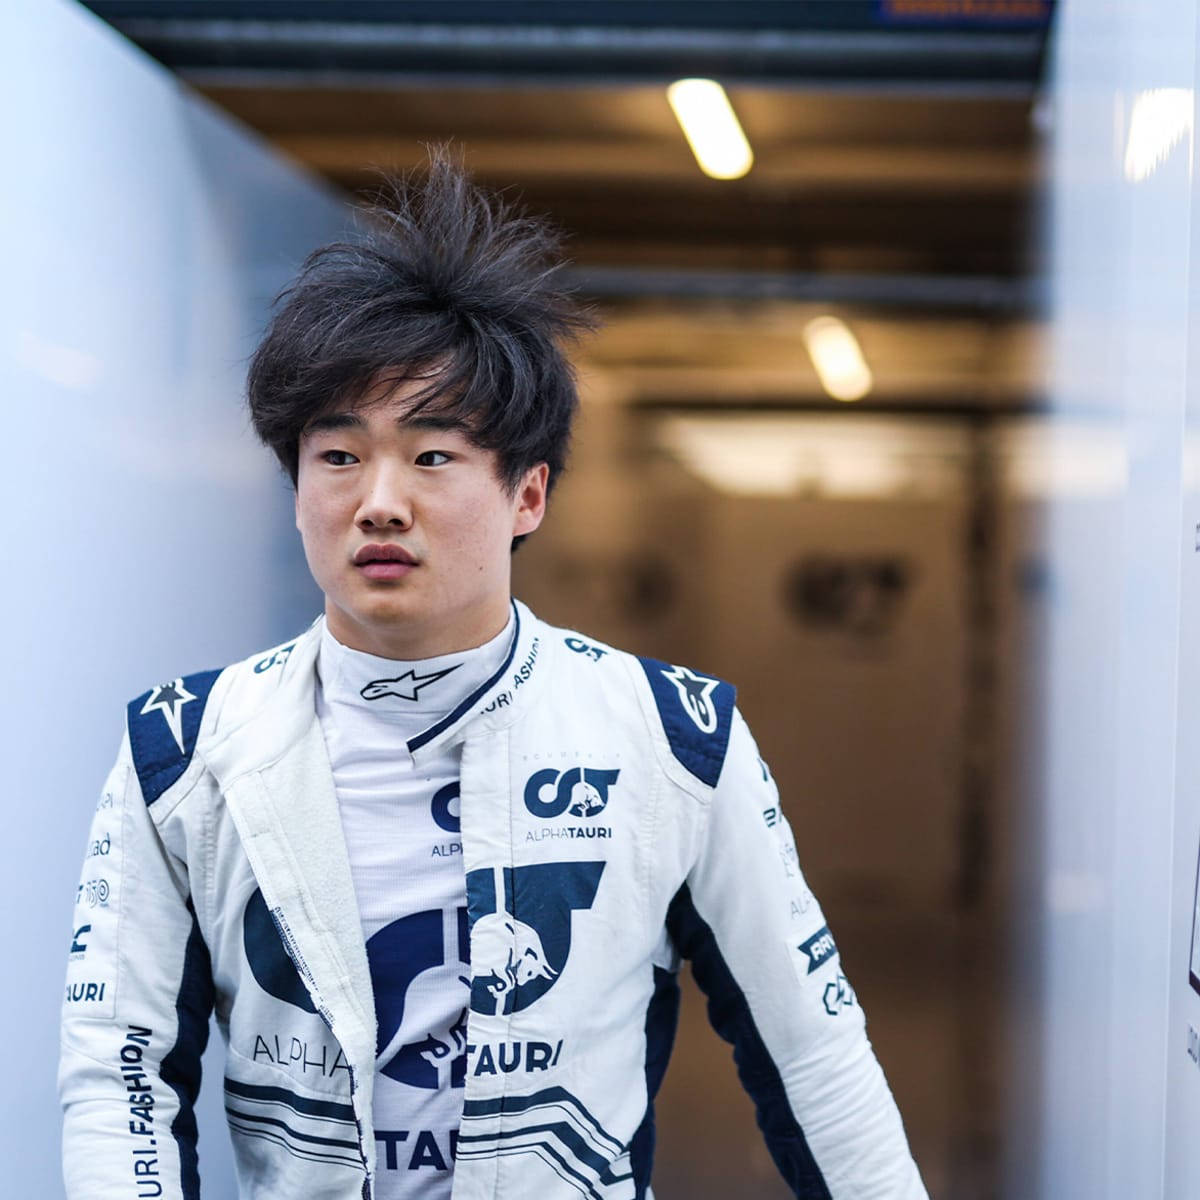 Yuki Tsunoda Racing Through A Tunnel During A Grand Prix Event. Wallpaper